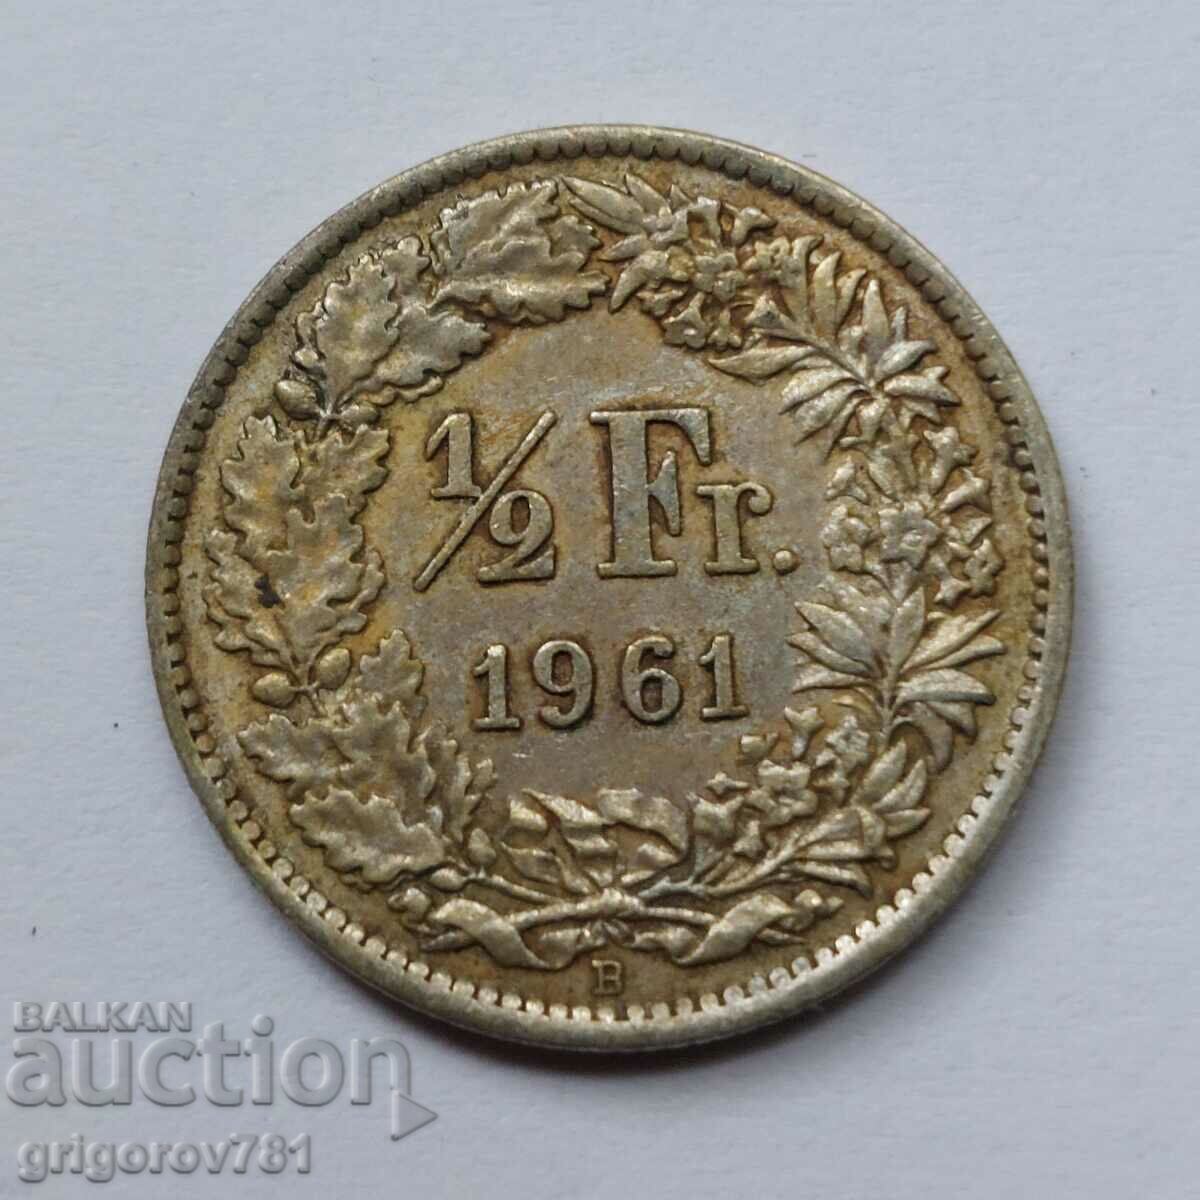 1/2 Franc Silver Switzerland 1961 B - Silver Coin #4